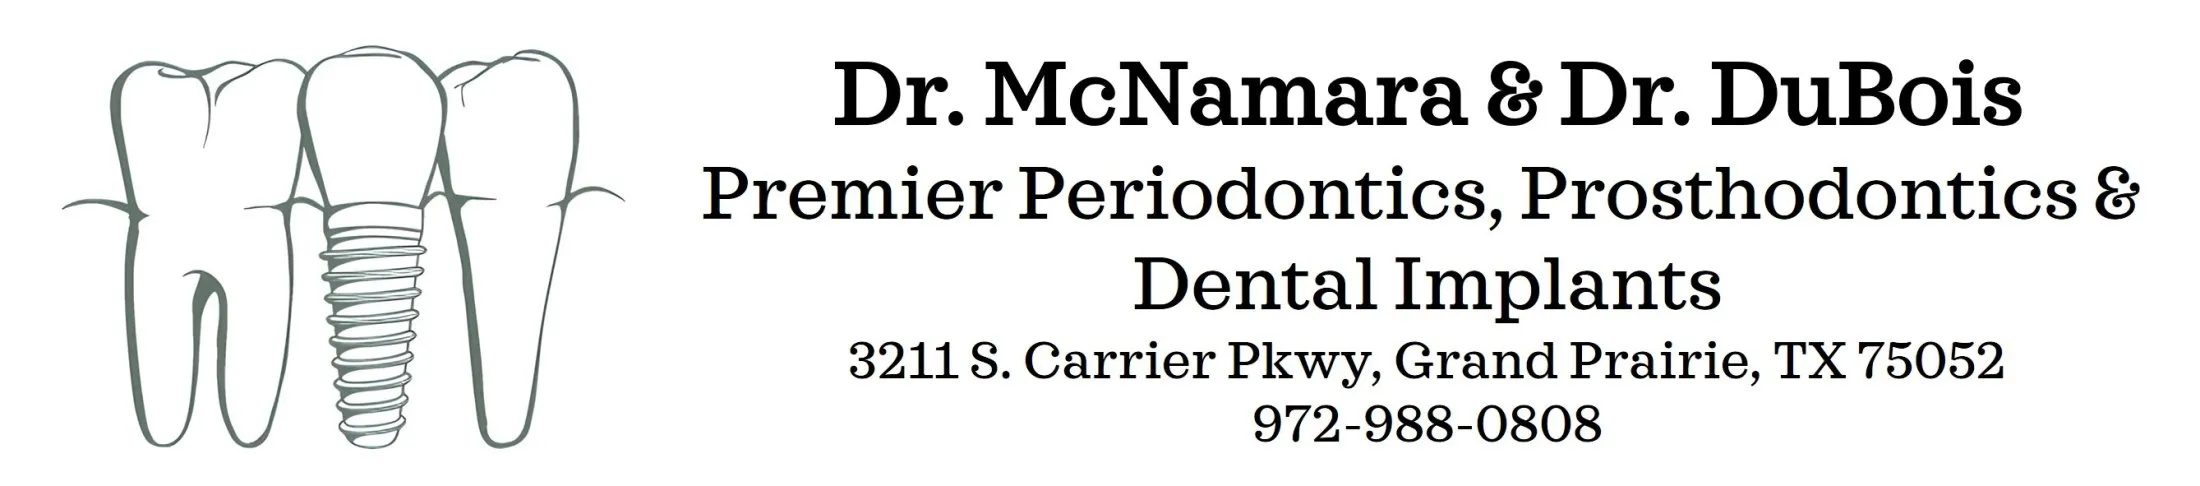 Link to Dr. McNamara & Dr. DuBois home page